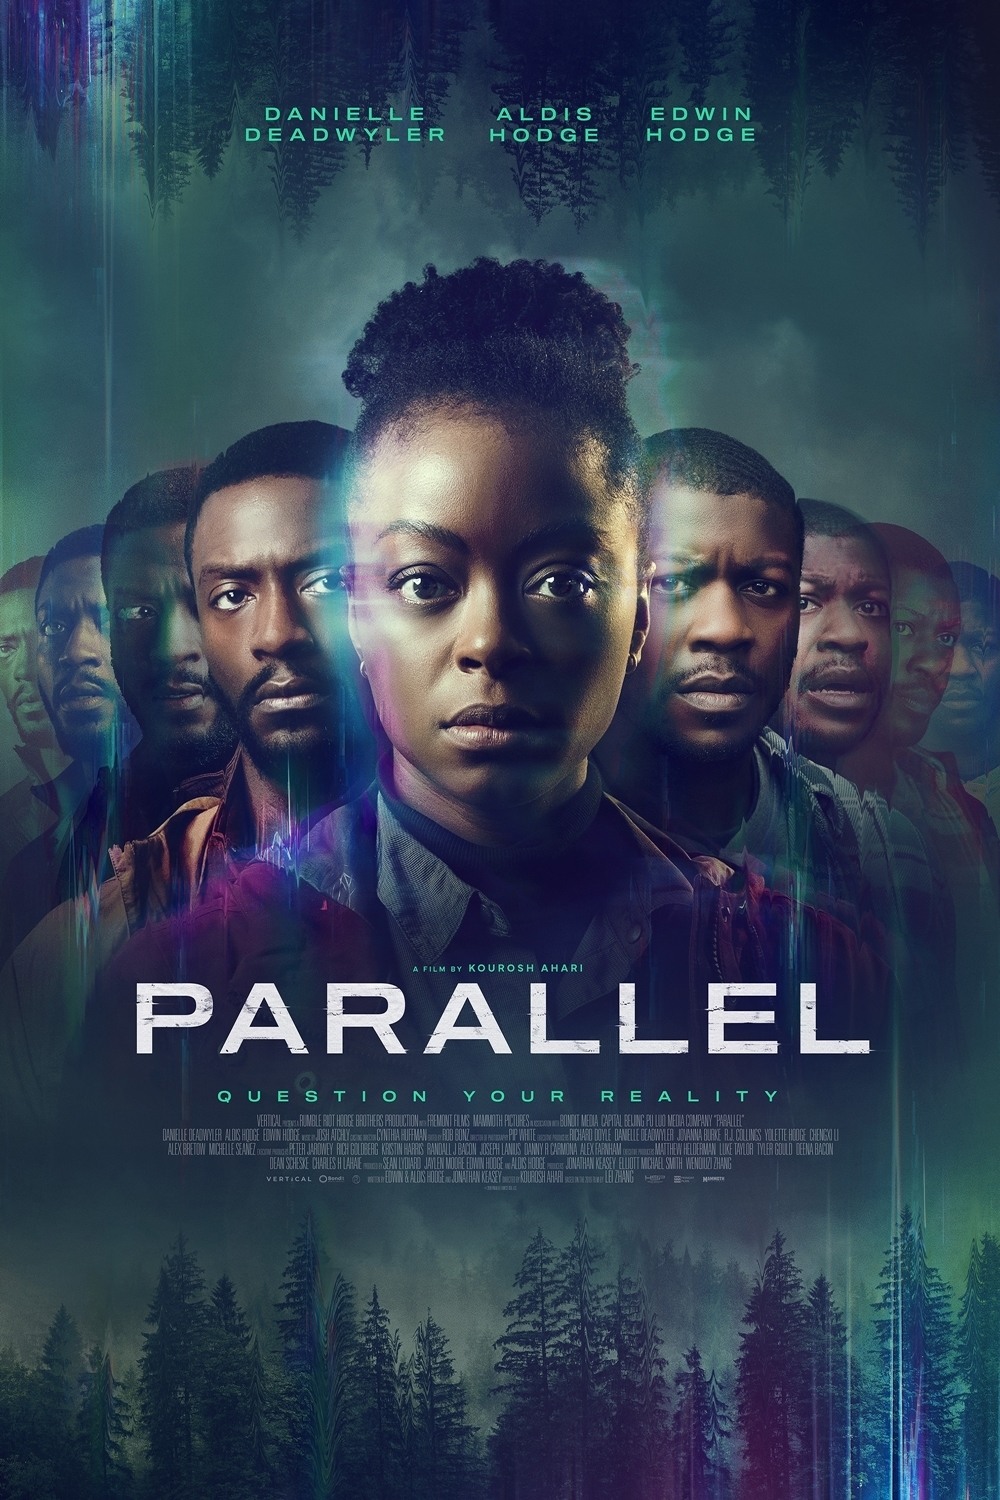 Filmi "Parallel" plakat